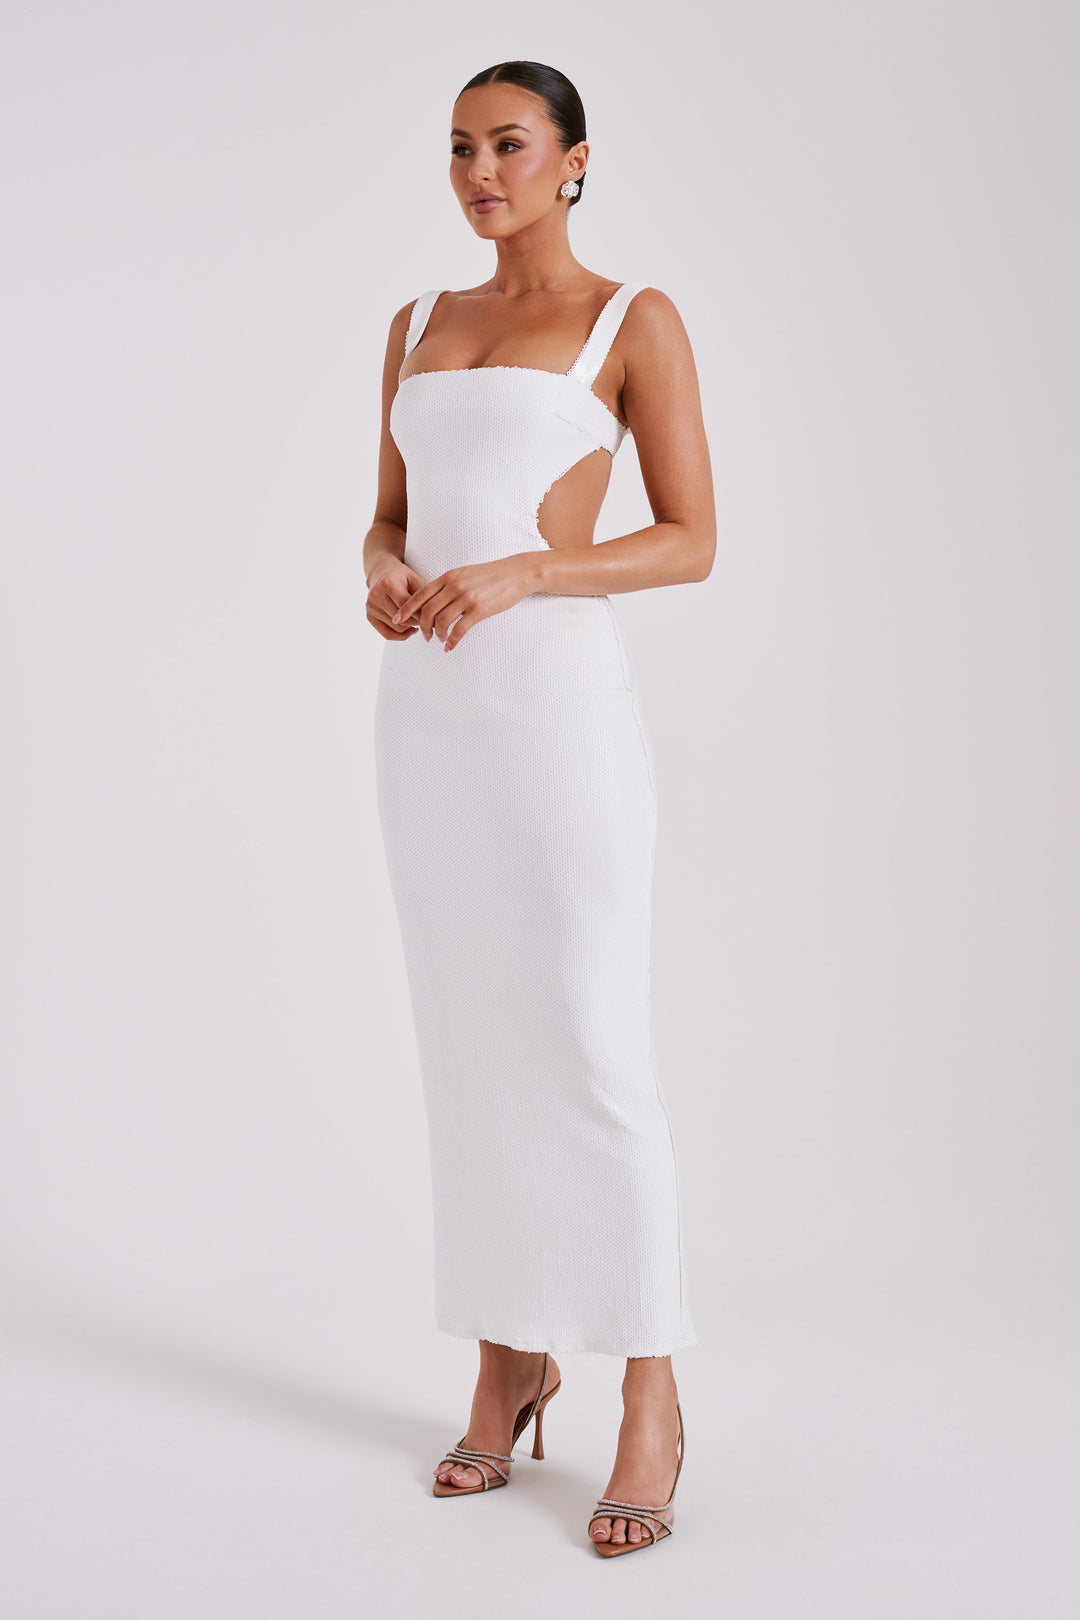 Sequin Sling Square Collar Backless Elite Dress-RESTOCK aclosy